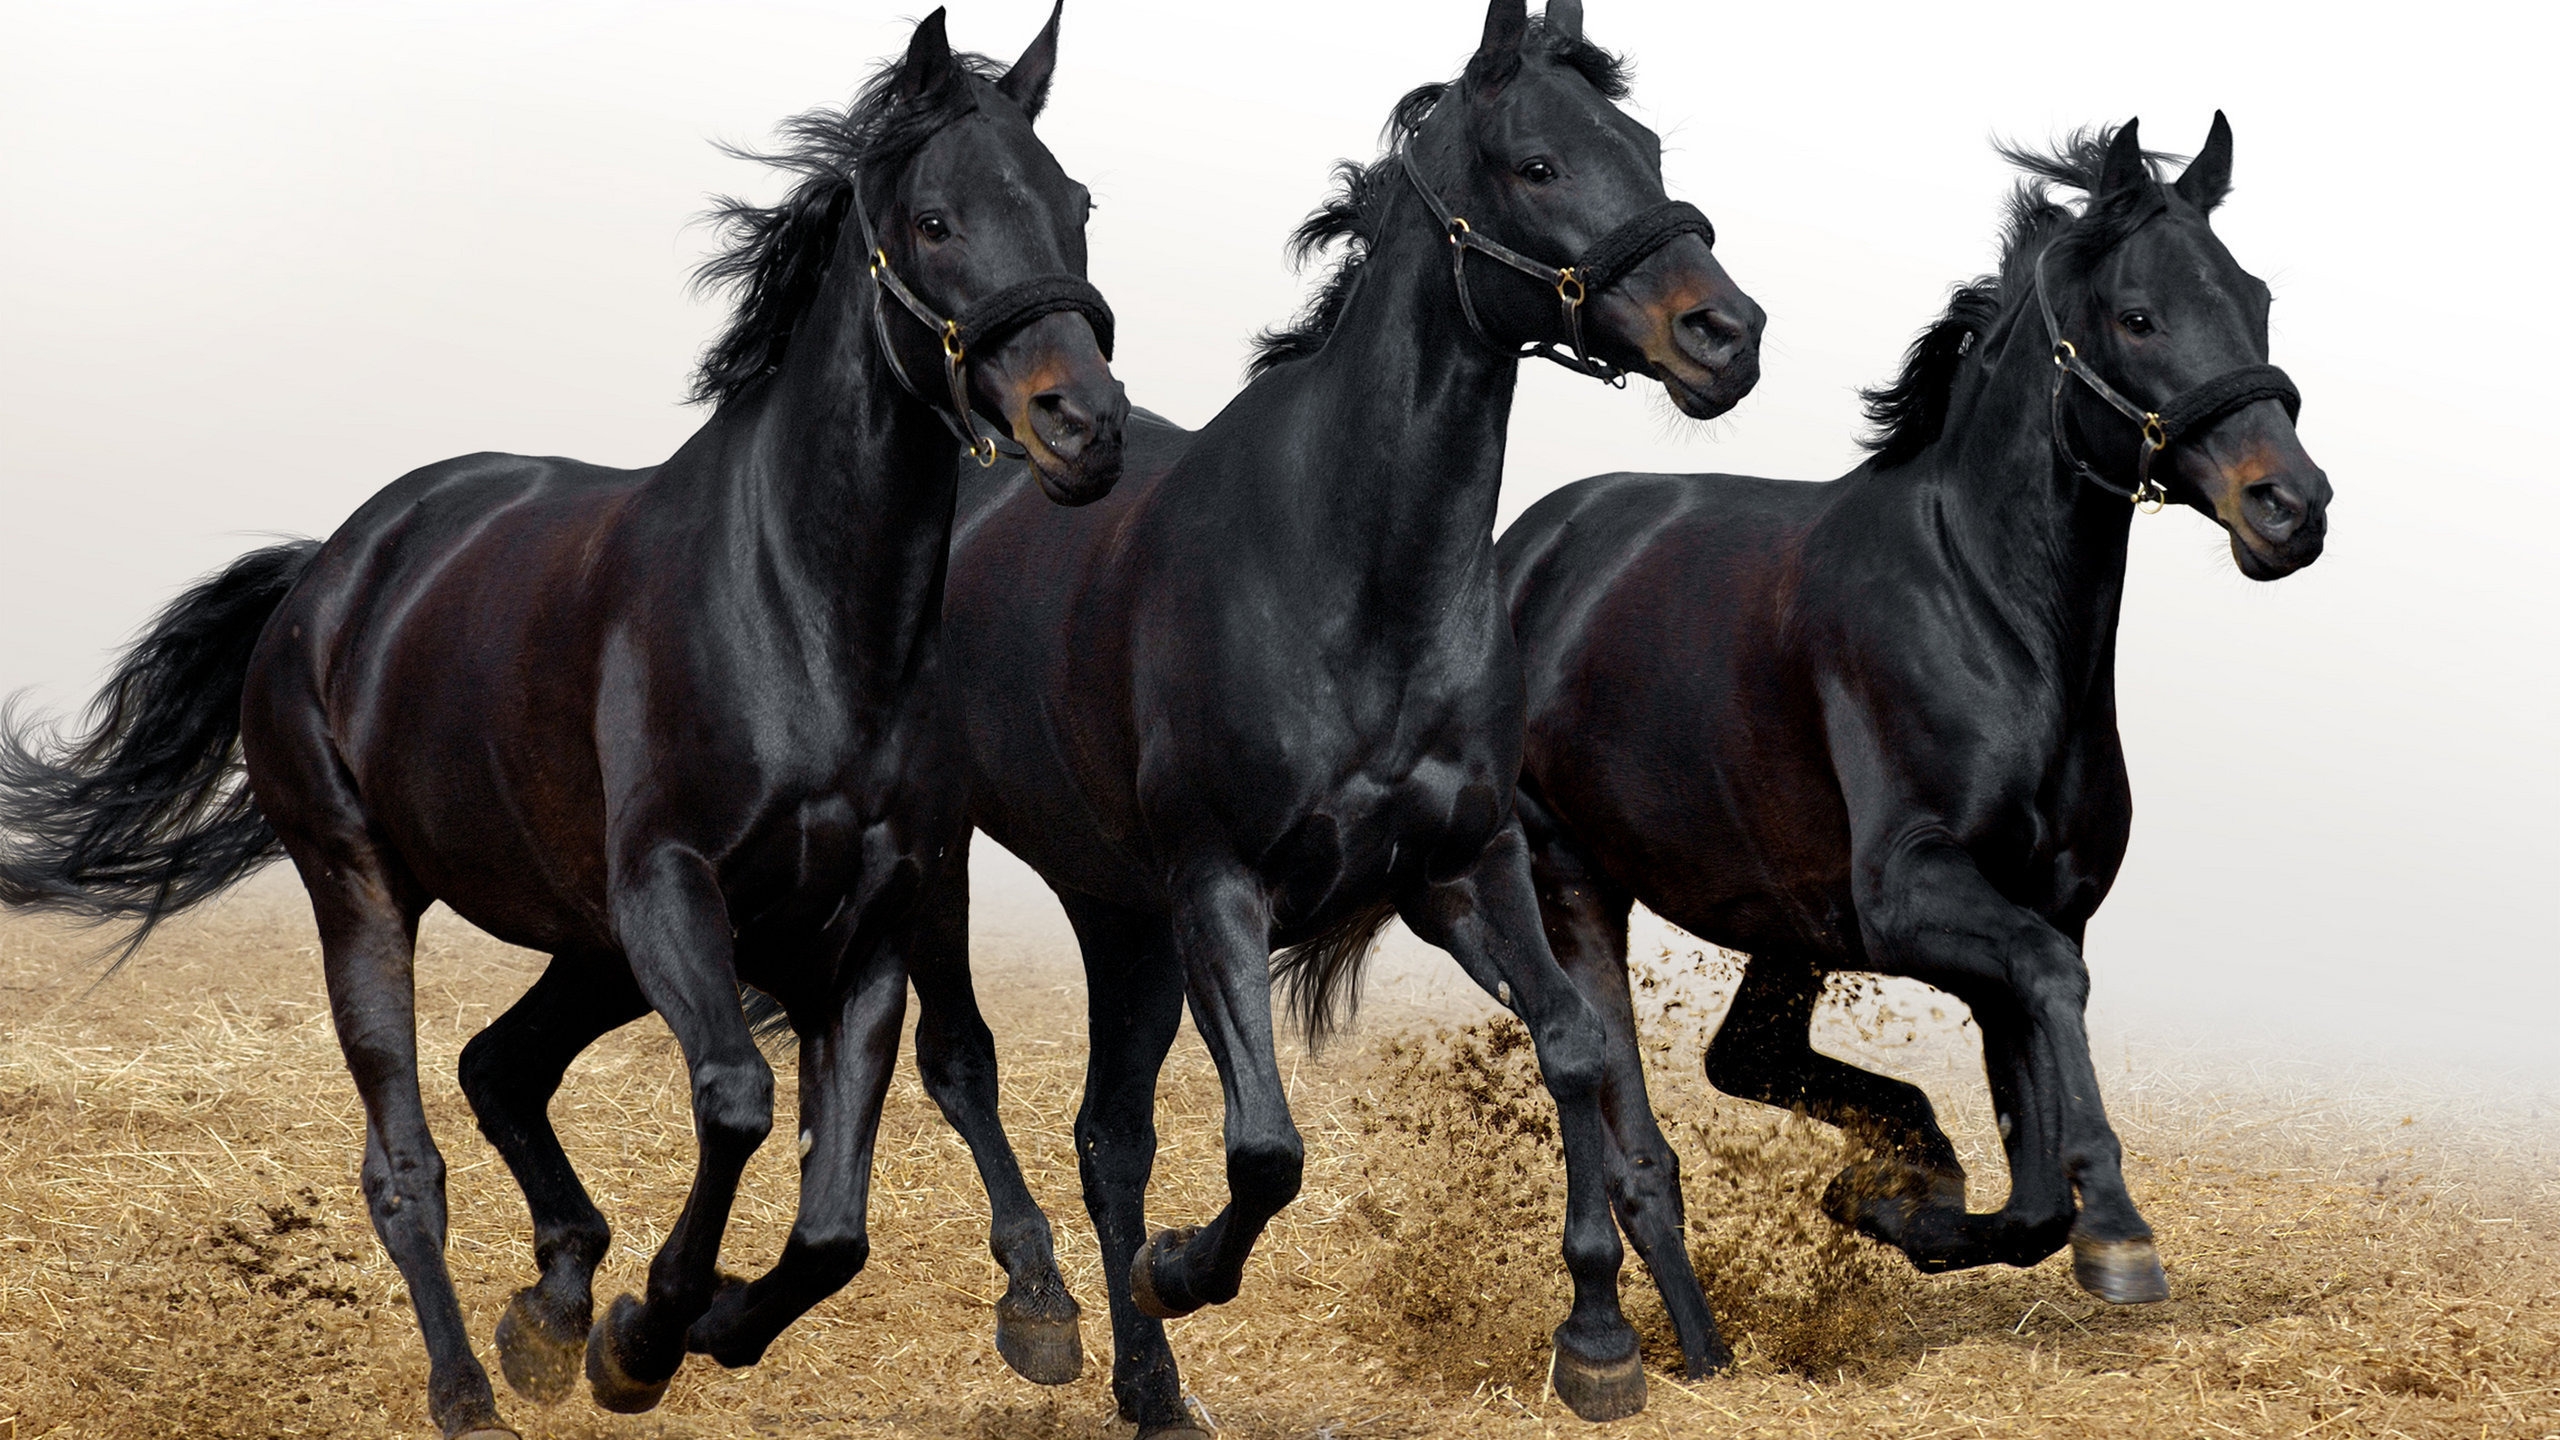 Three Black Horses for 2560x1440 HDTV resolution